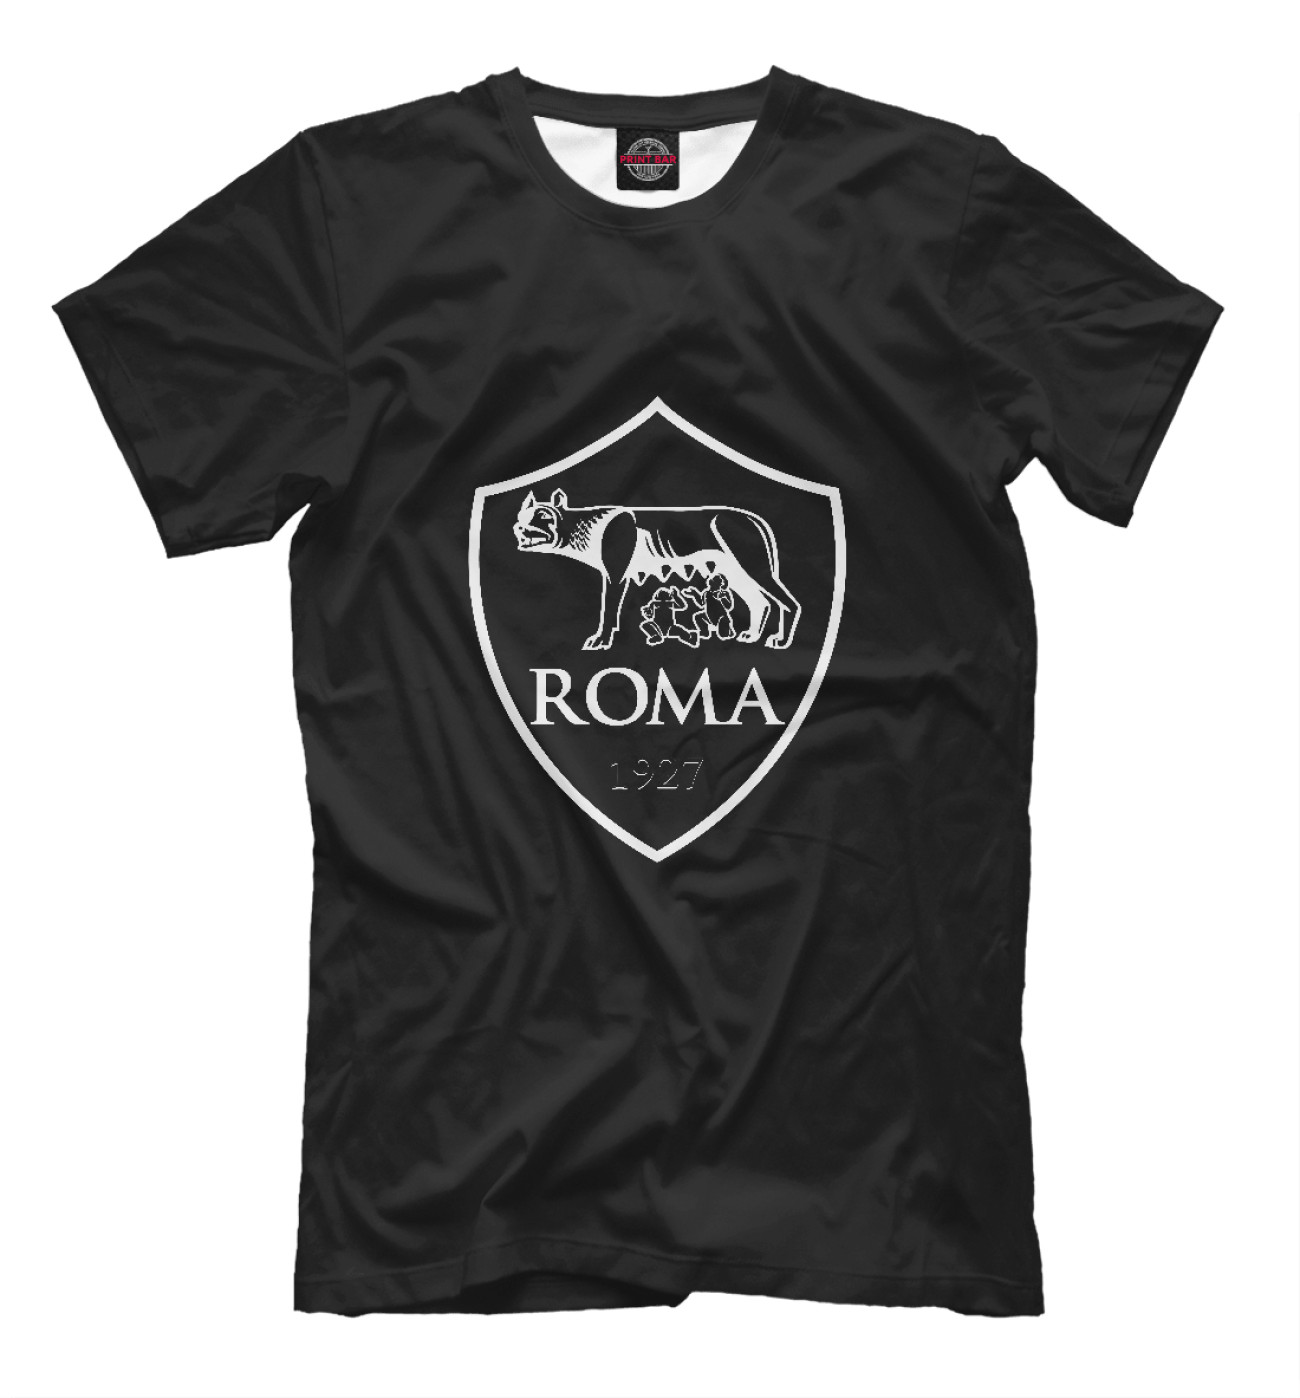 Мужская Футболка FC ROMA Black&White, артикул: FTO-315326-fut-2